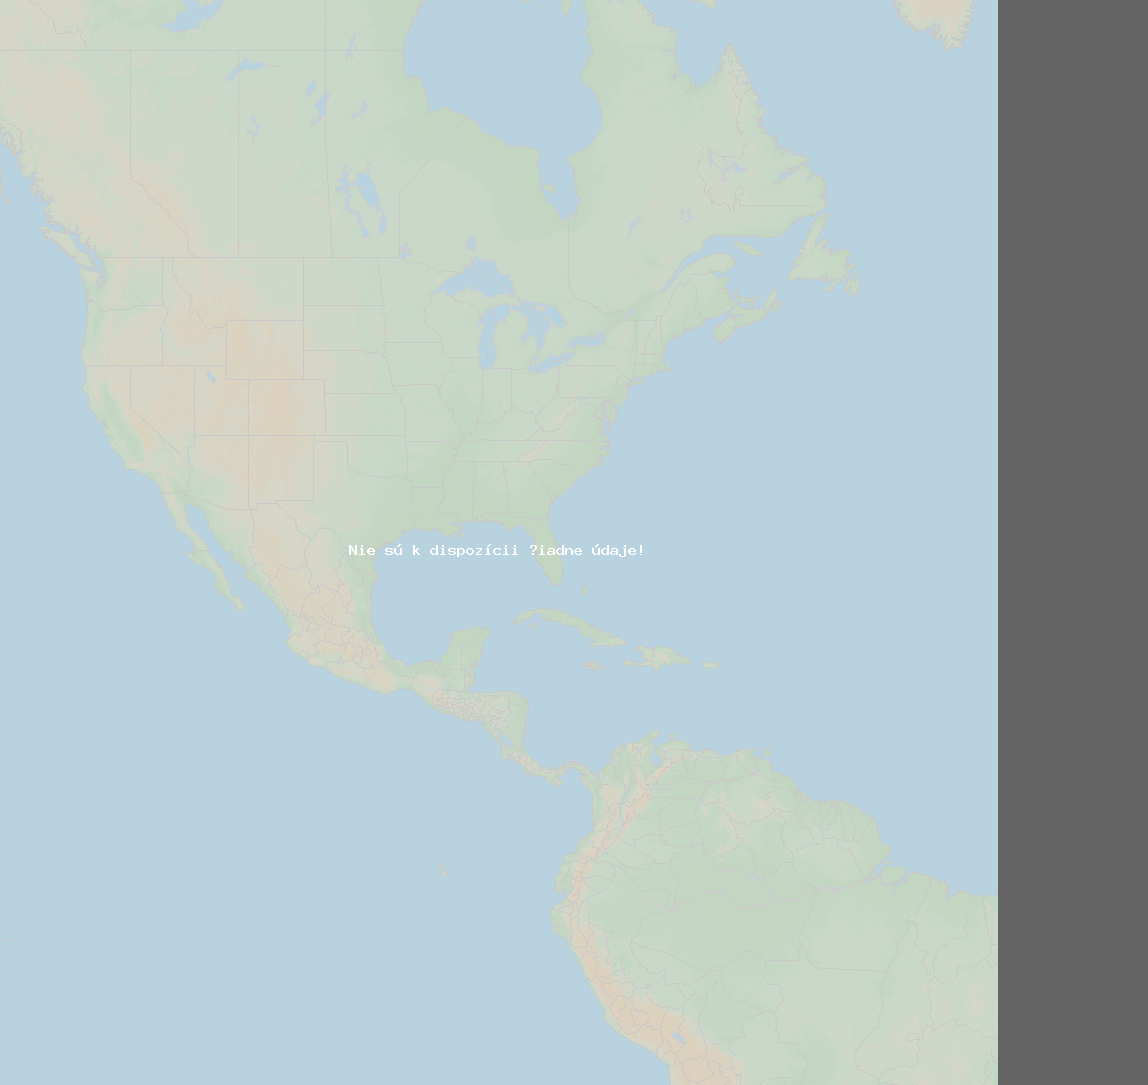 Pomer bleskov (Stanica indianapolis) North America 2021 November